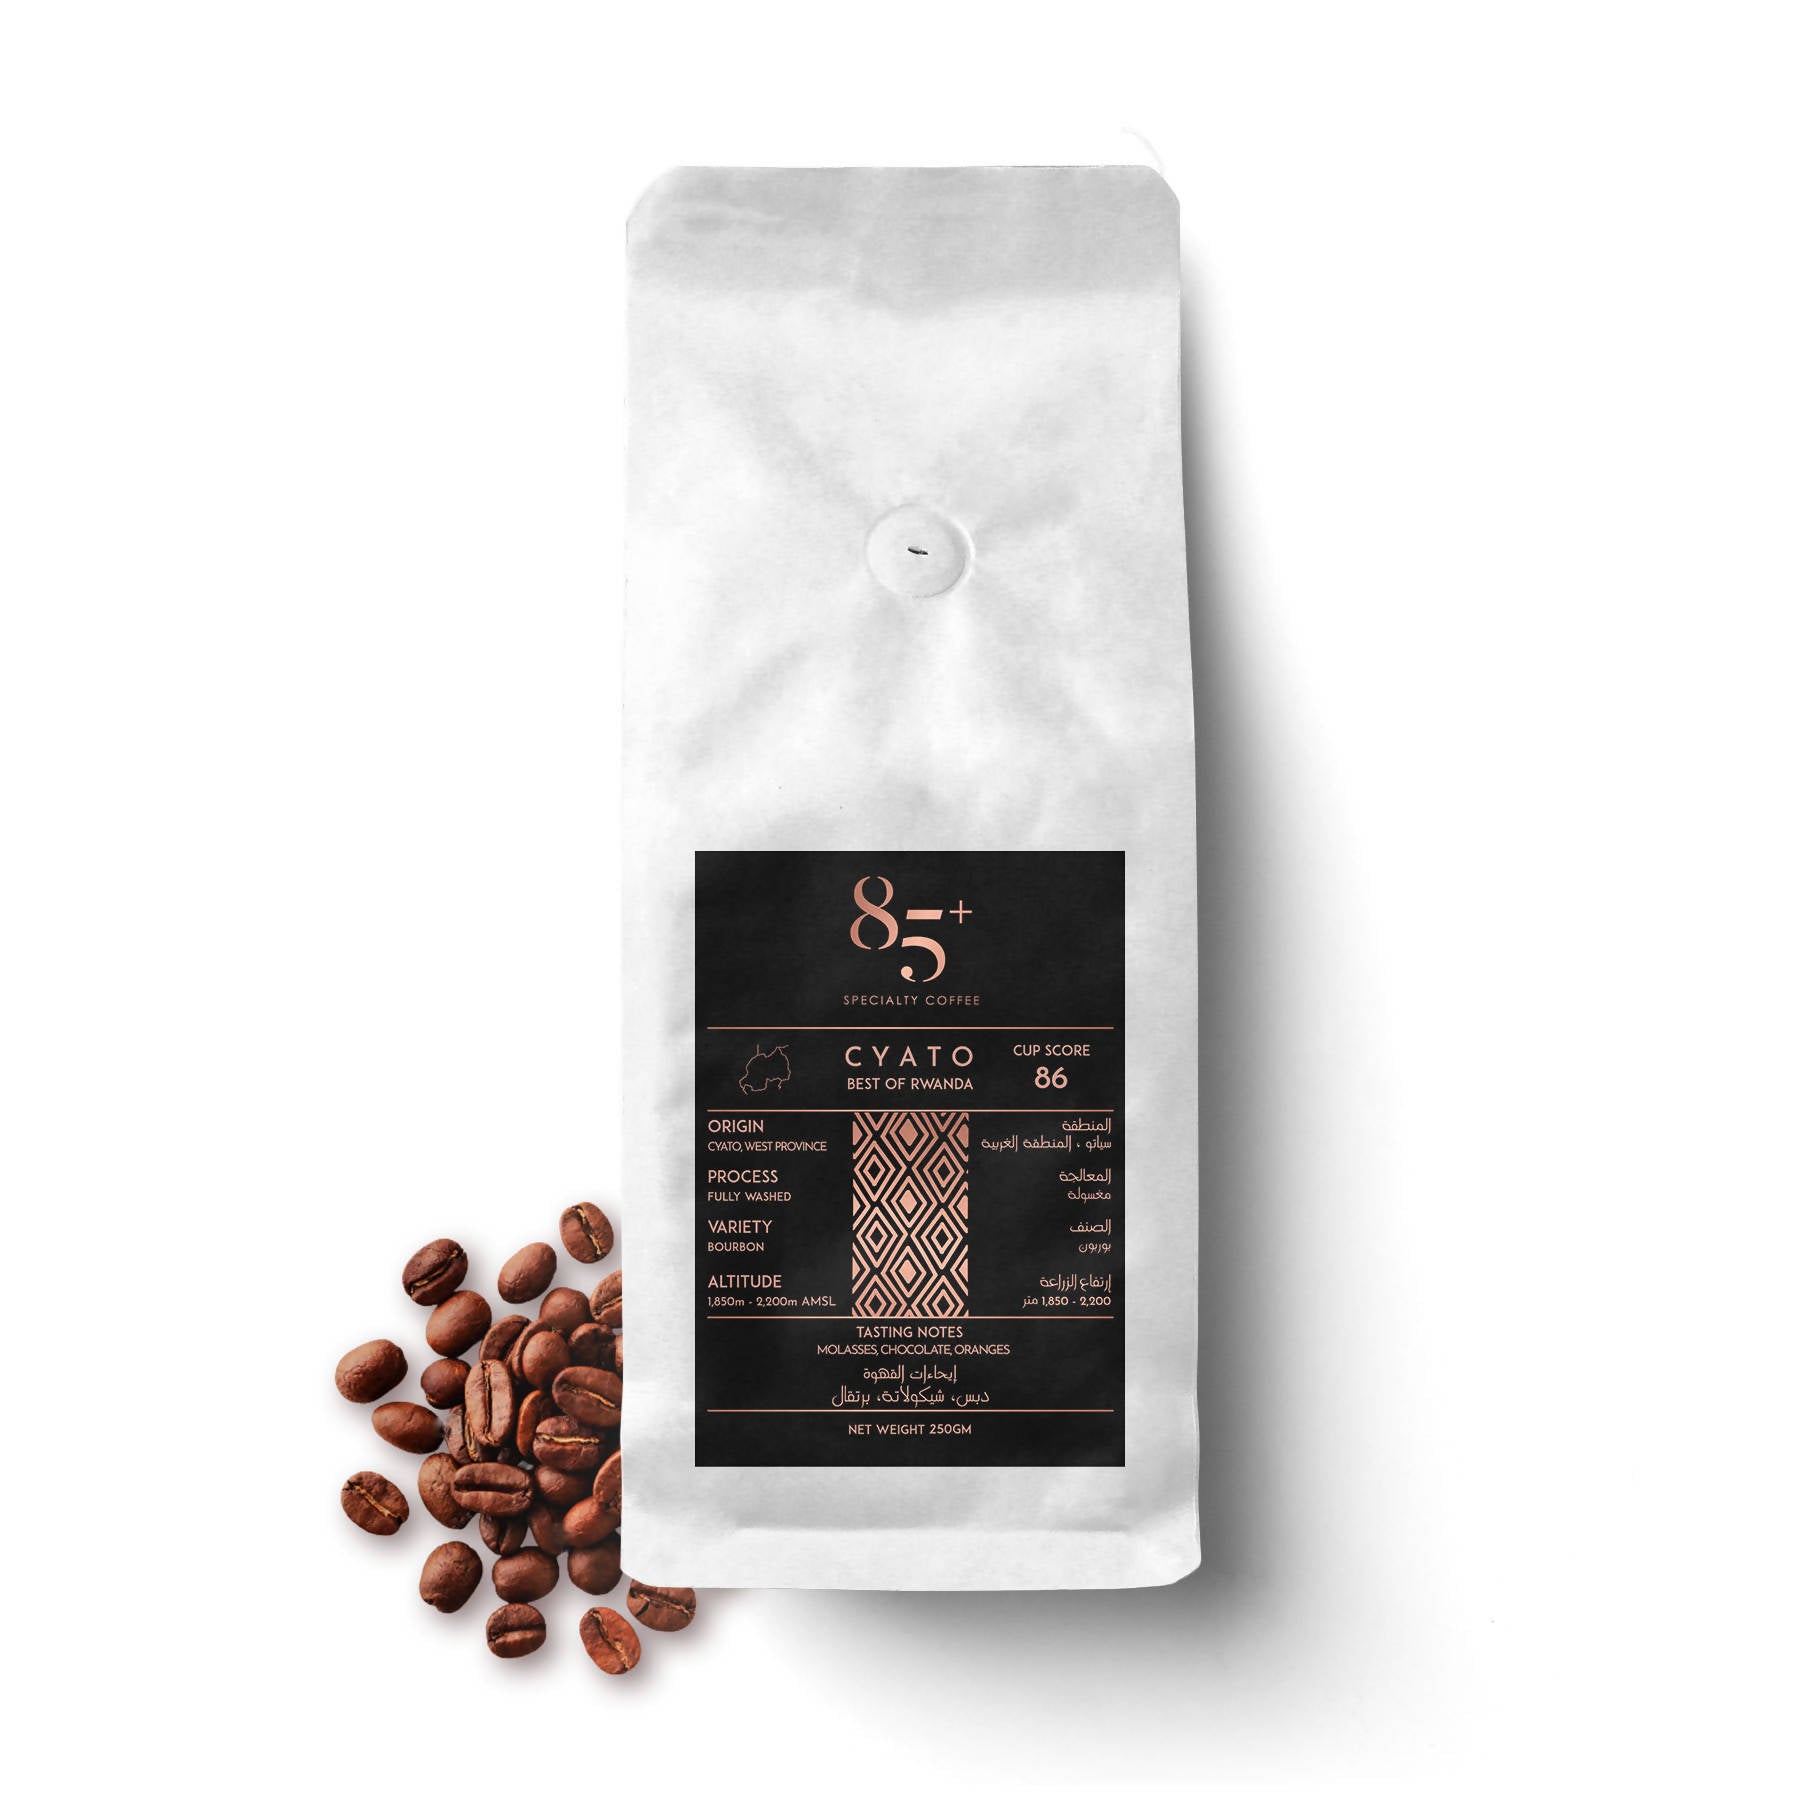 Rwanda - CYATO | Cup Score 86 - BeanBurds 85+ Specialty Coffee 200G / Whole Beans Specialty Coffee Beans